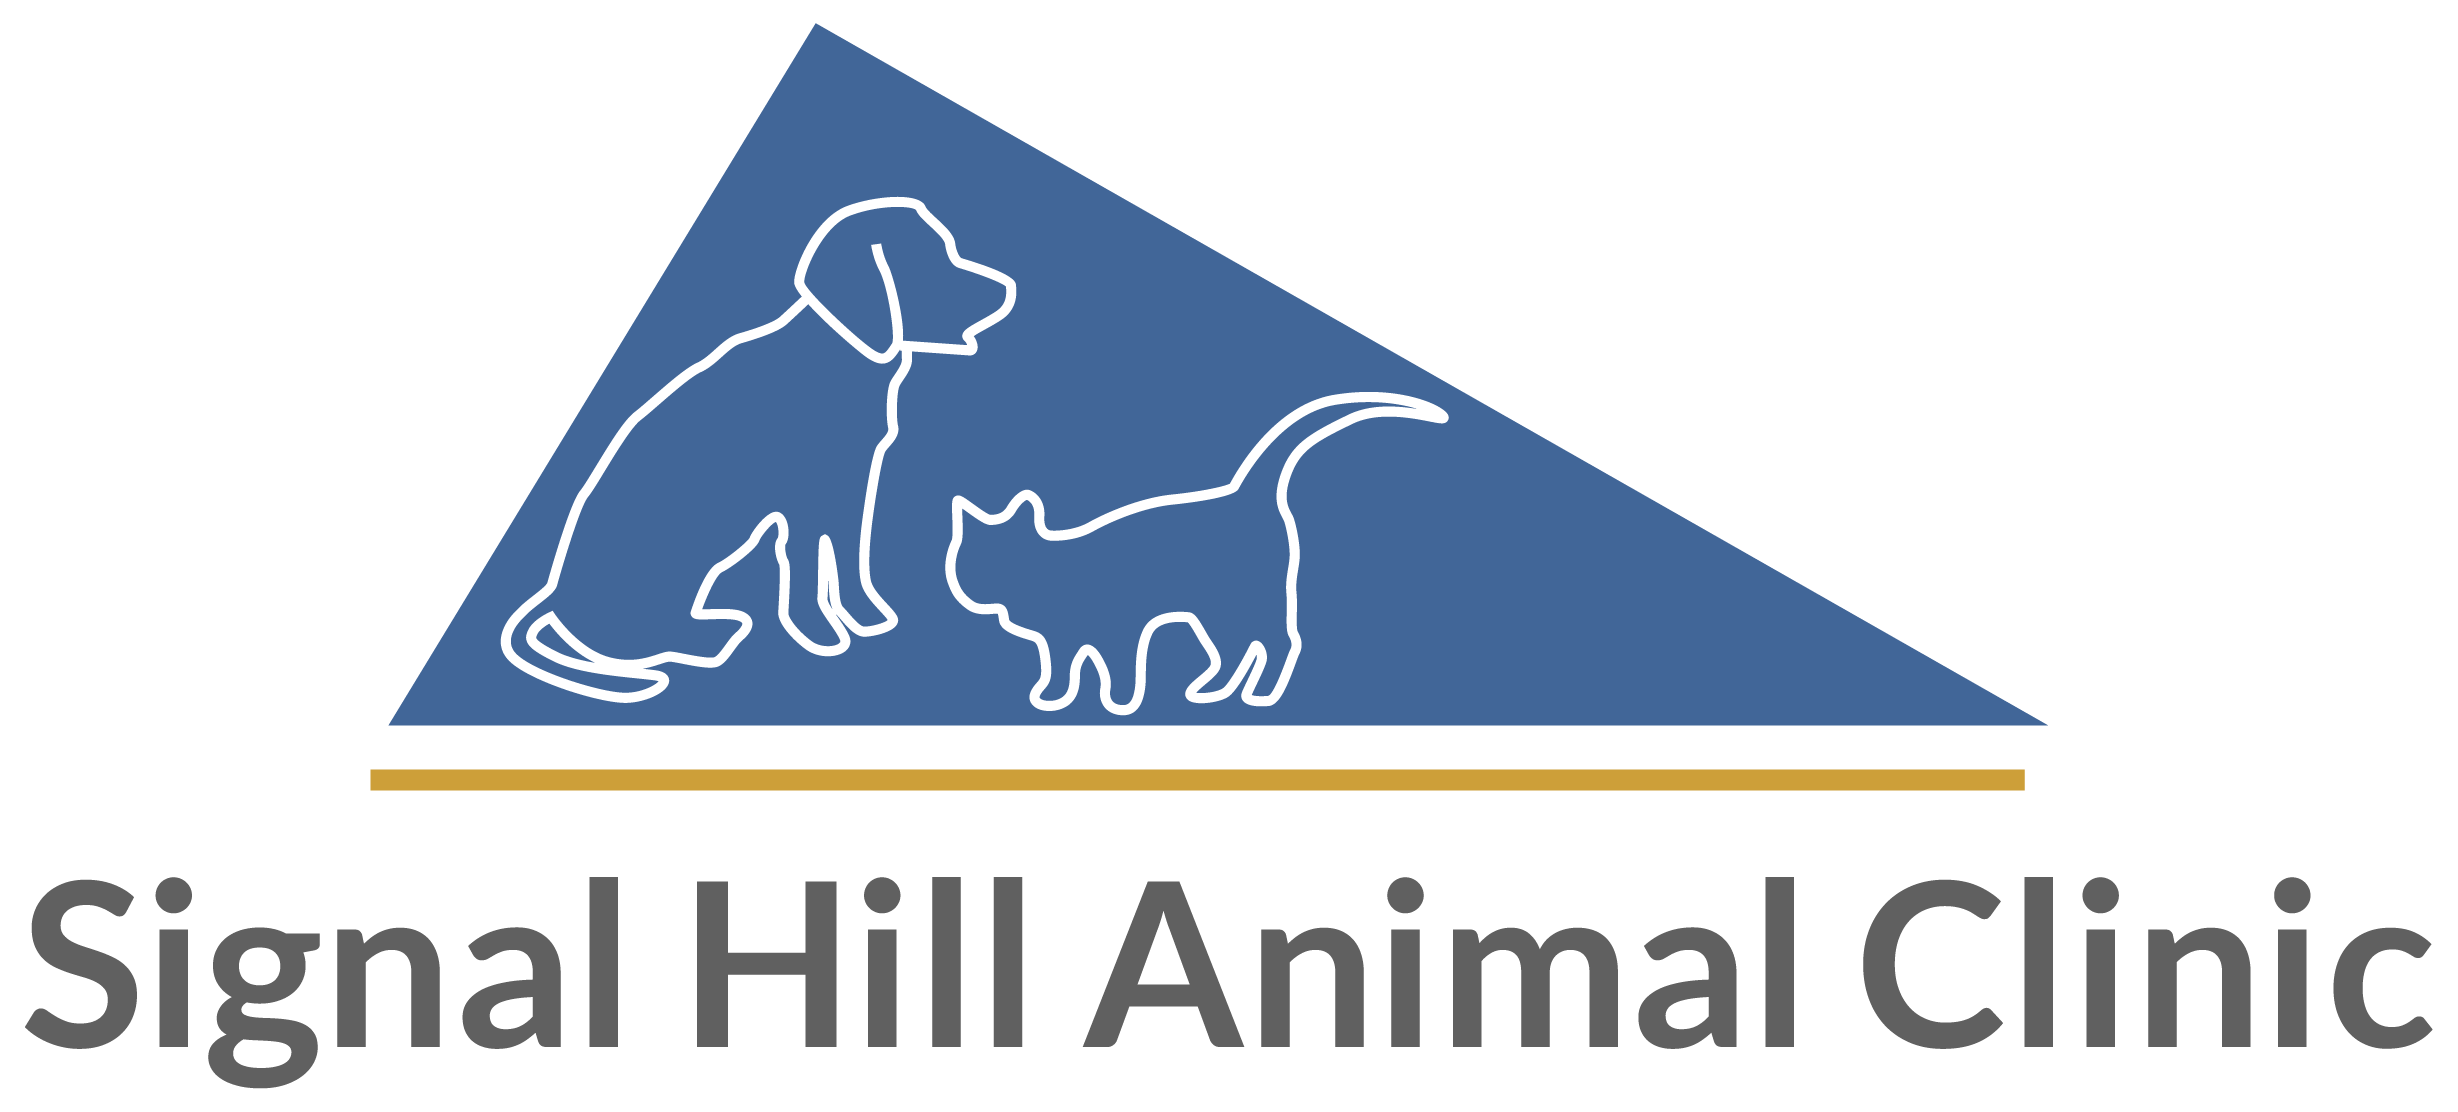 Signal Hill Animal Clinic: Veterinarian in Calgary, AB